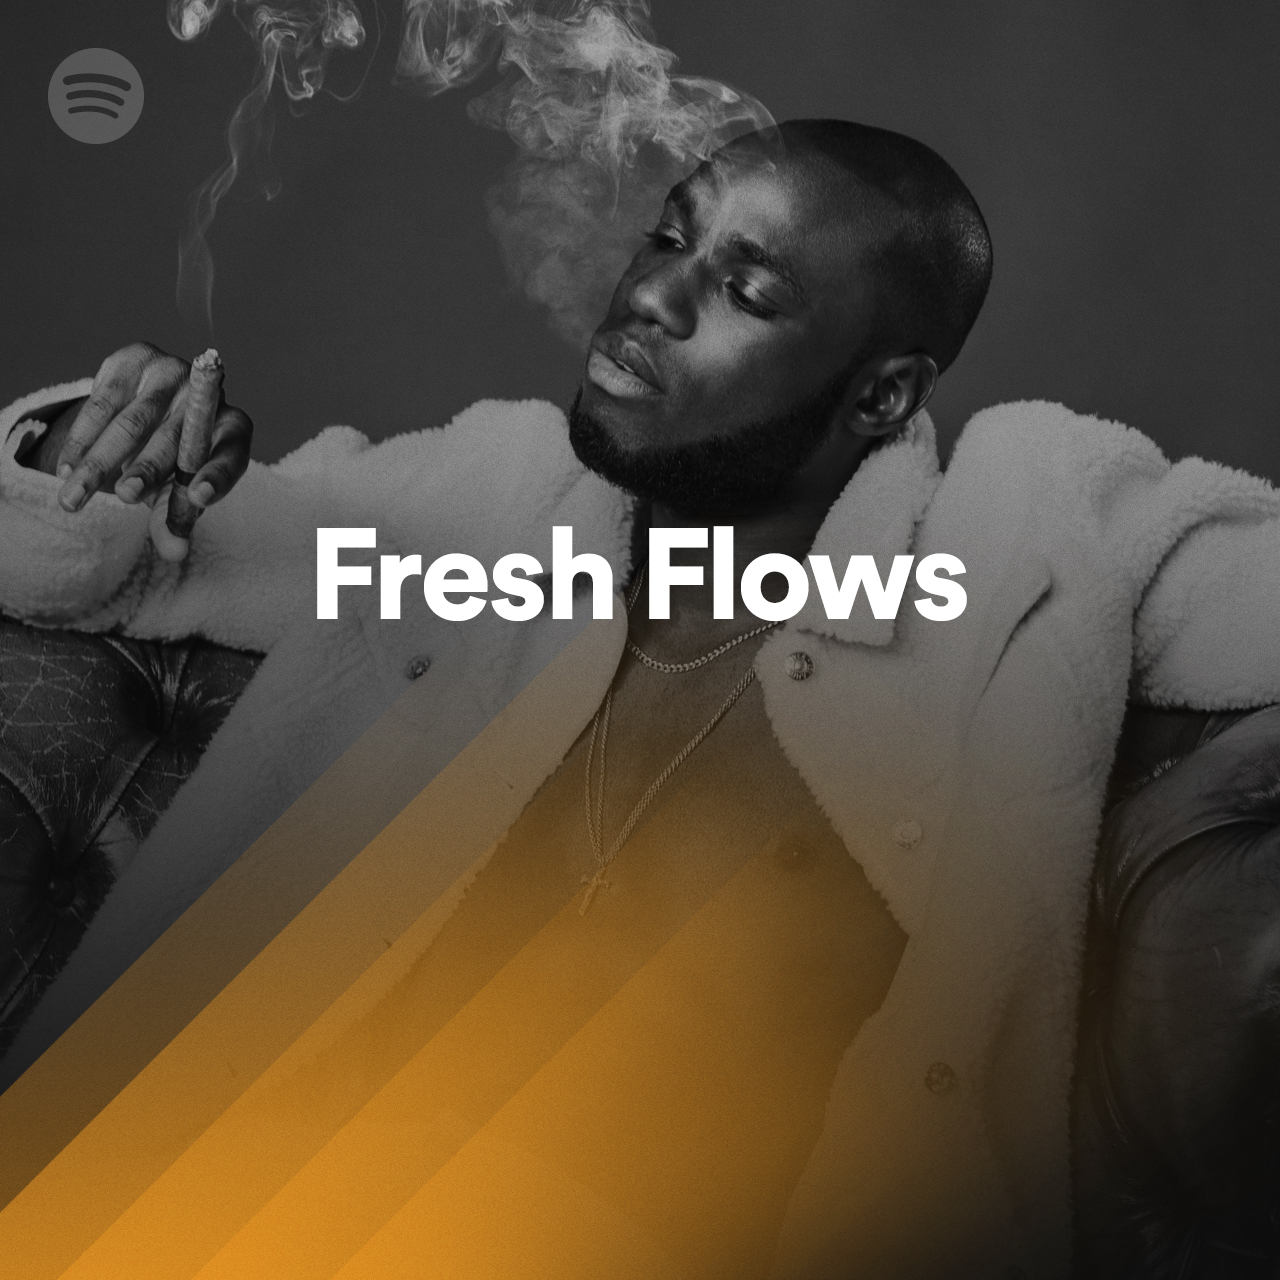 Jayboogz staat op de cover van de ‘Fresh Flows’ playlist van Spotify! Thanks @spotifynl